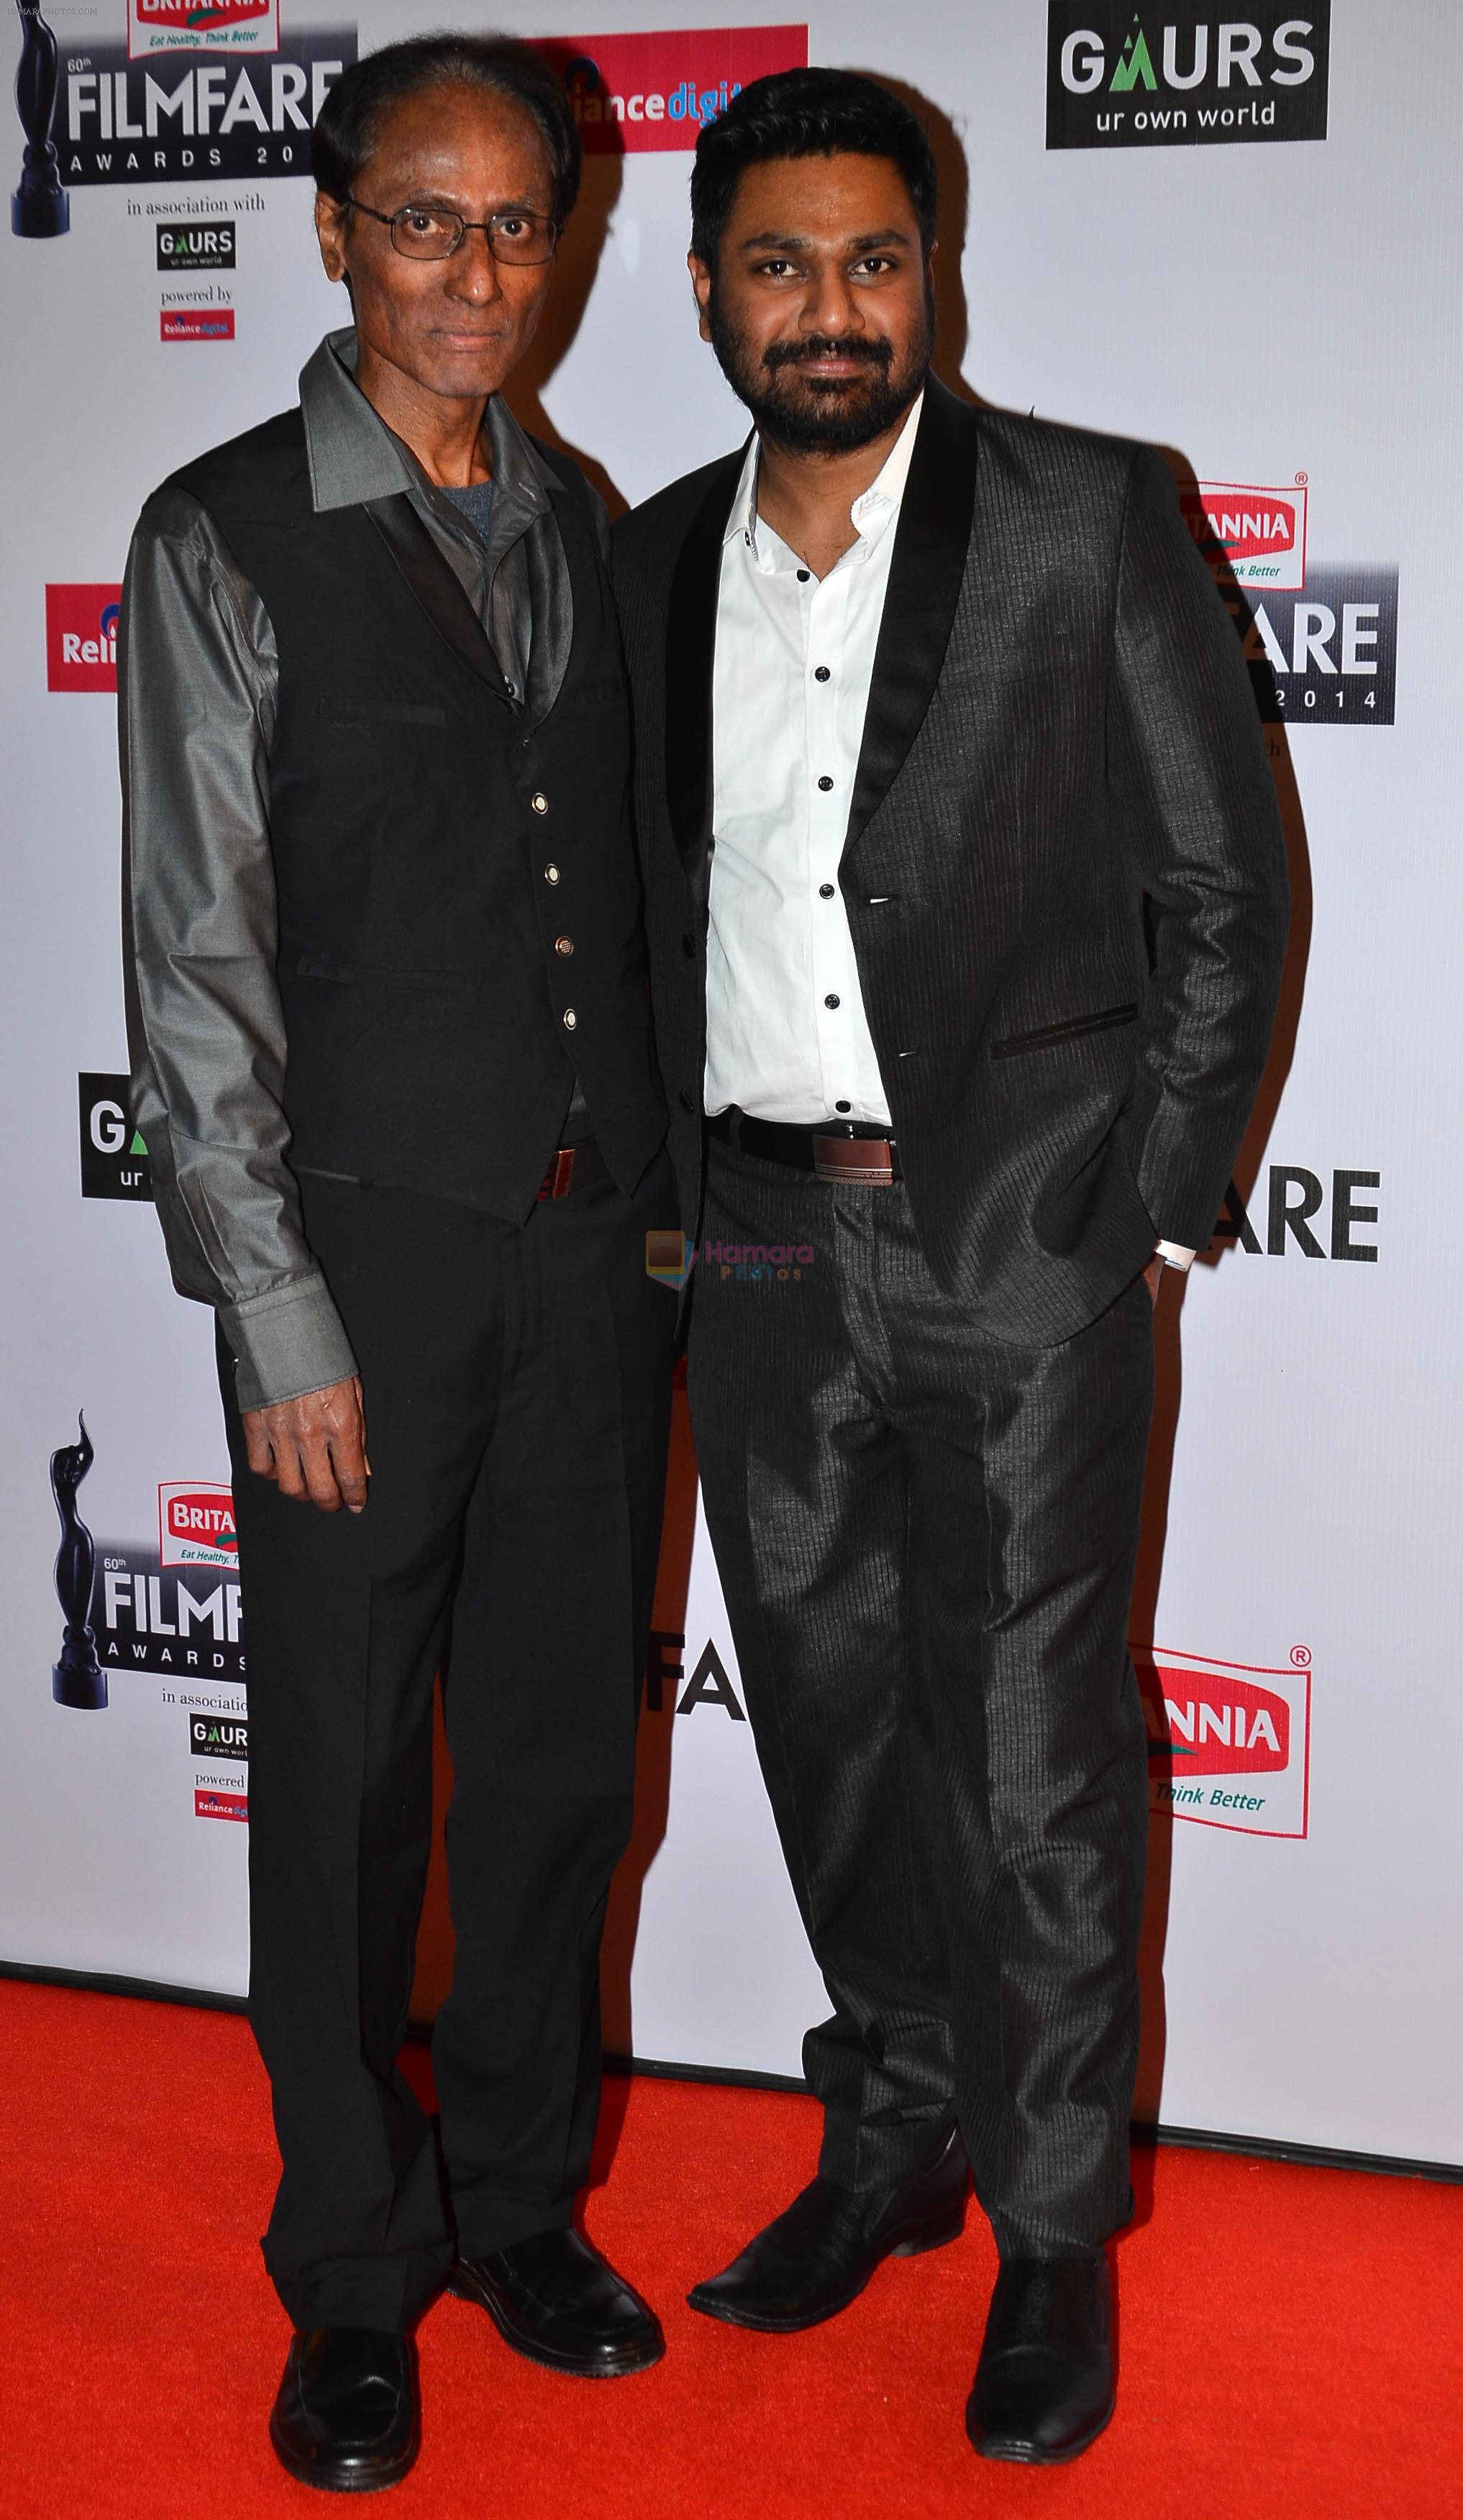 Mithoon Sharma with dad Naresh Sharma graces the red carpet at the 60th Britannia Filmfare Awards